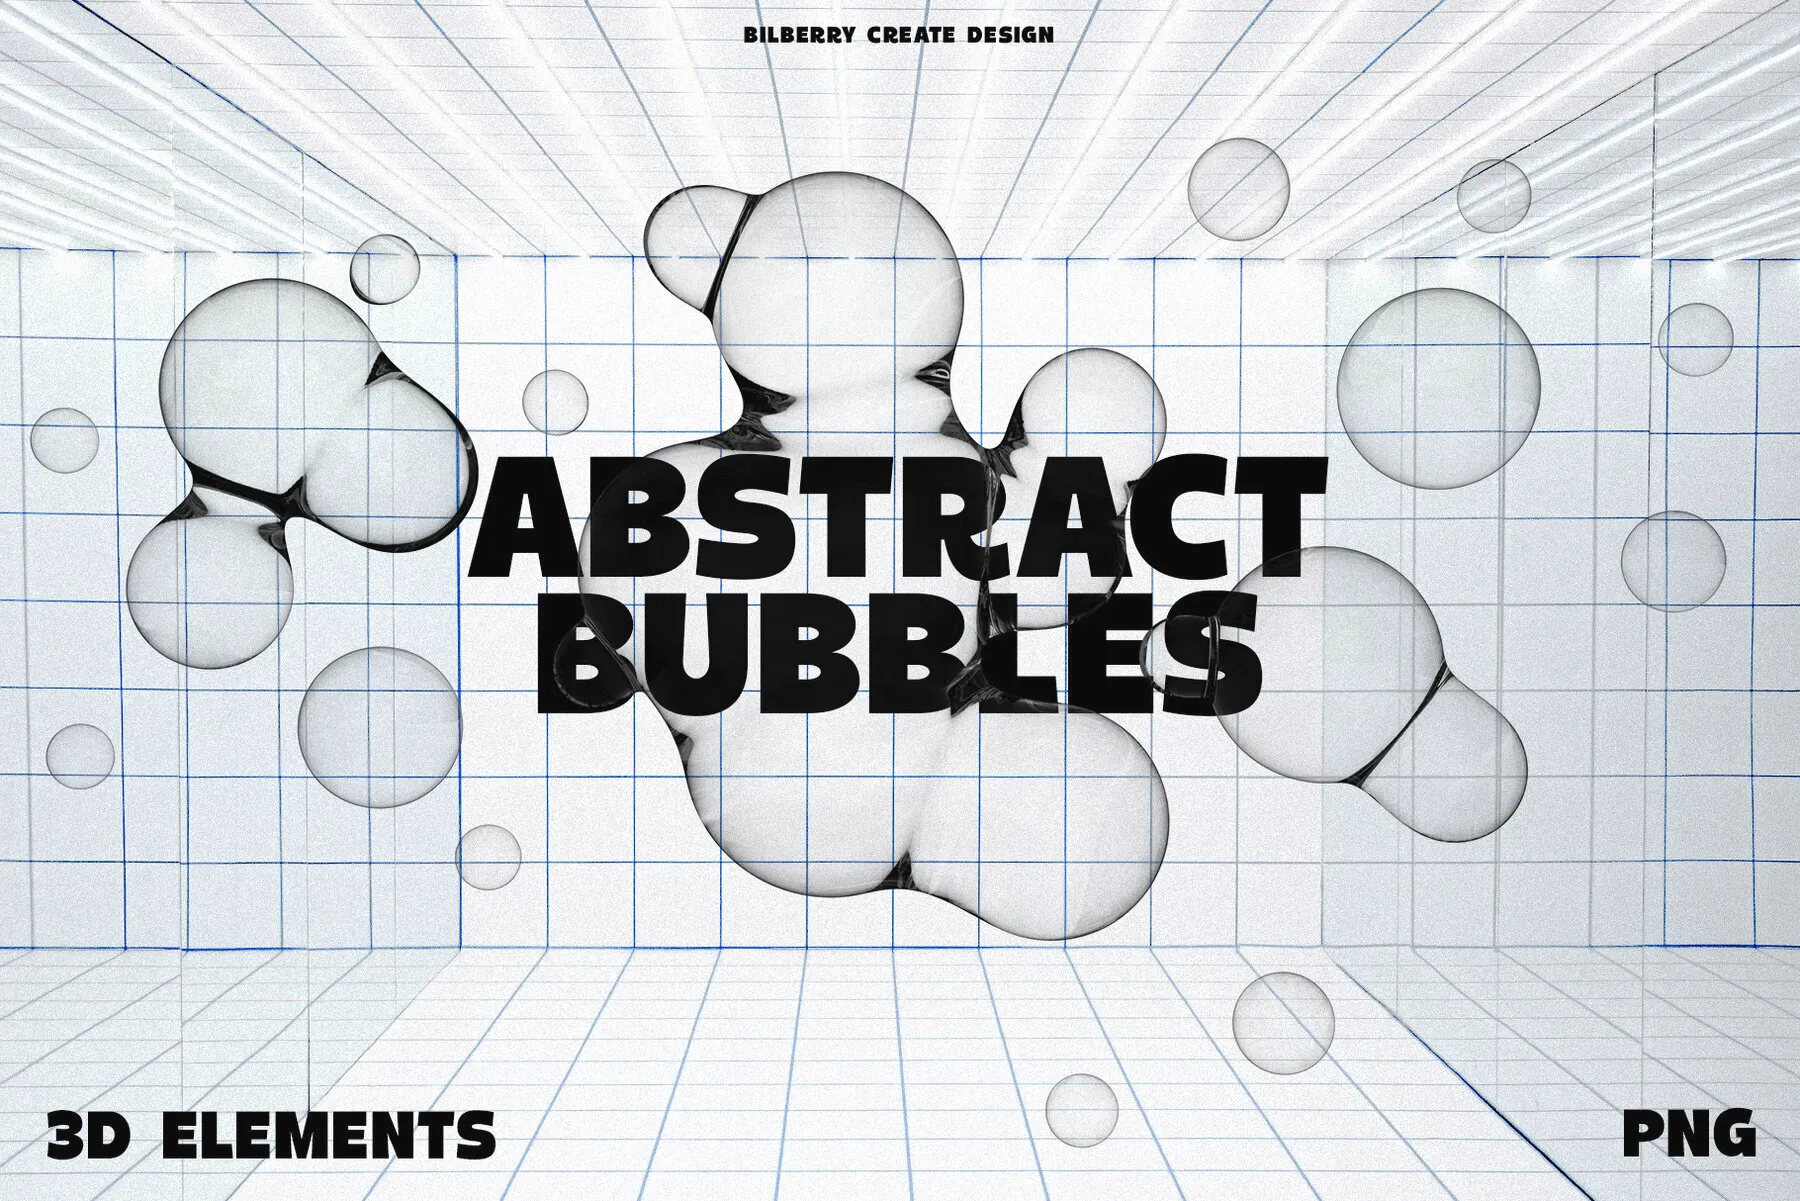 Abstract bubbles 3D art set